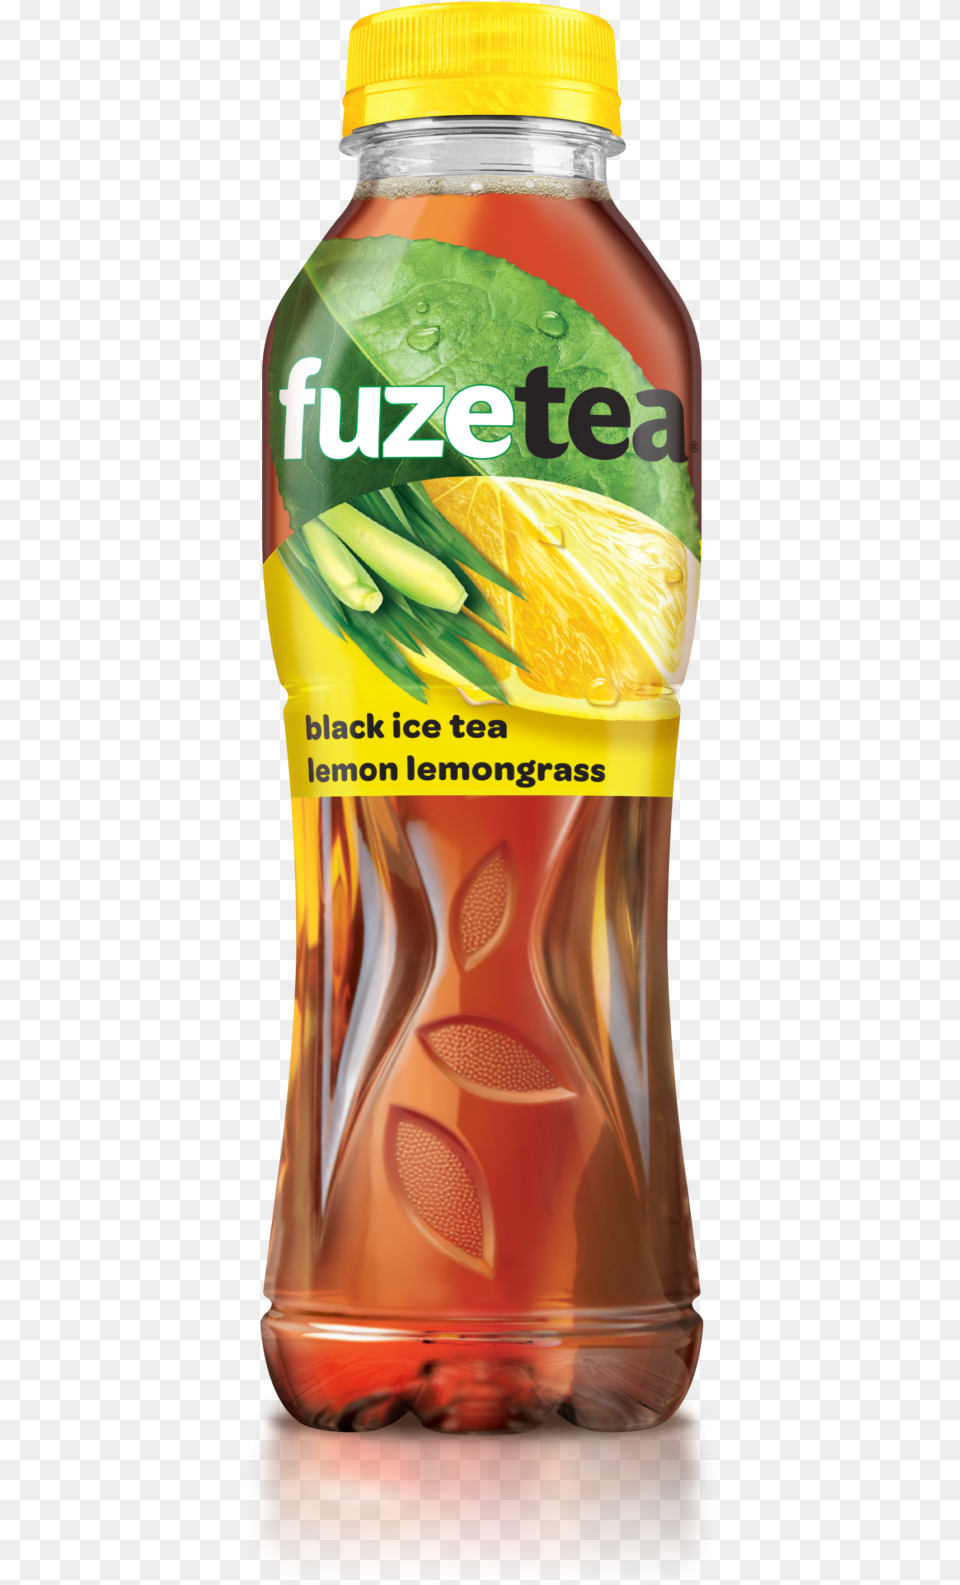 Fuzetea Pet Engineering Coca Cola Fuze Tea Lemon Lemongrass, Beverage, Juice, Food, Ketchup Png